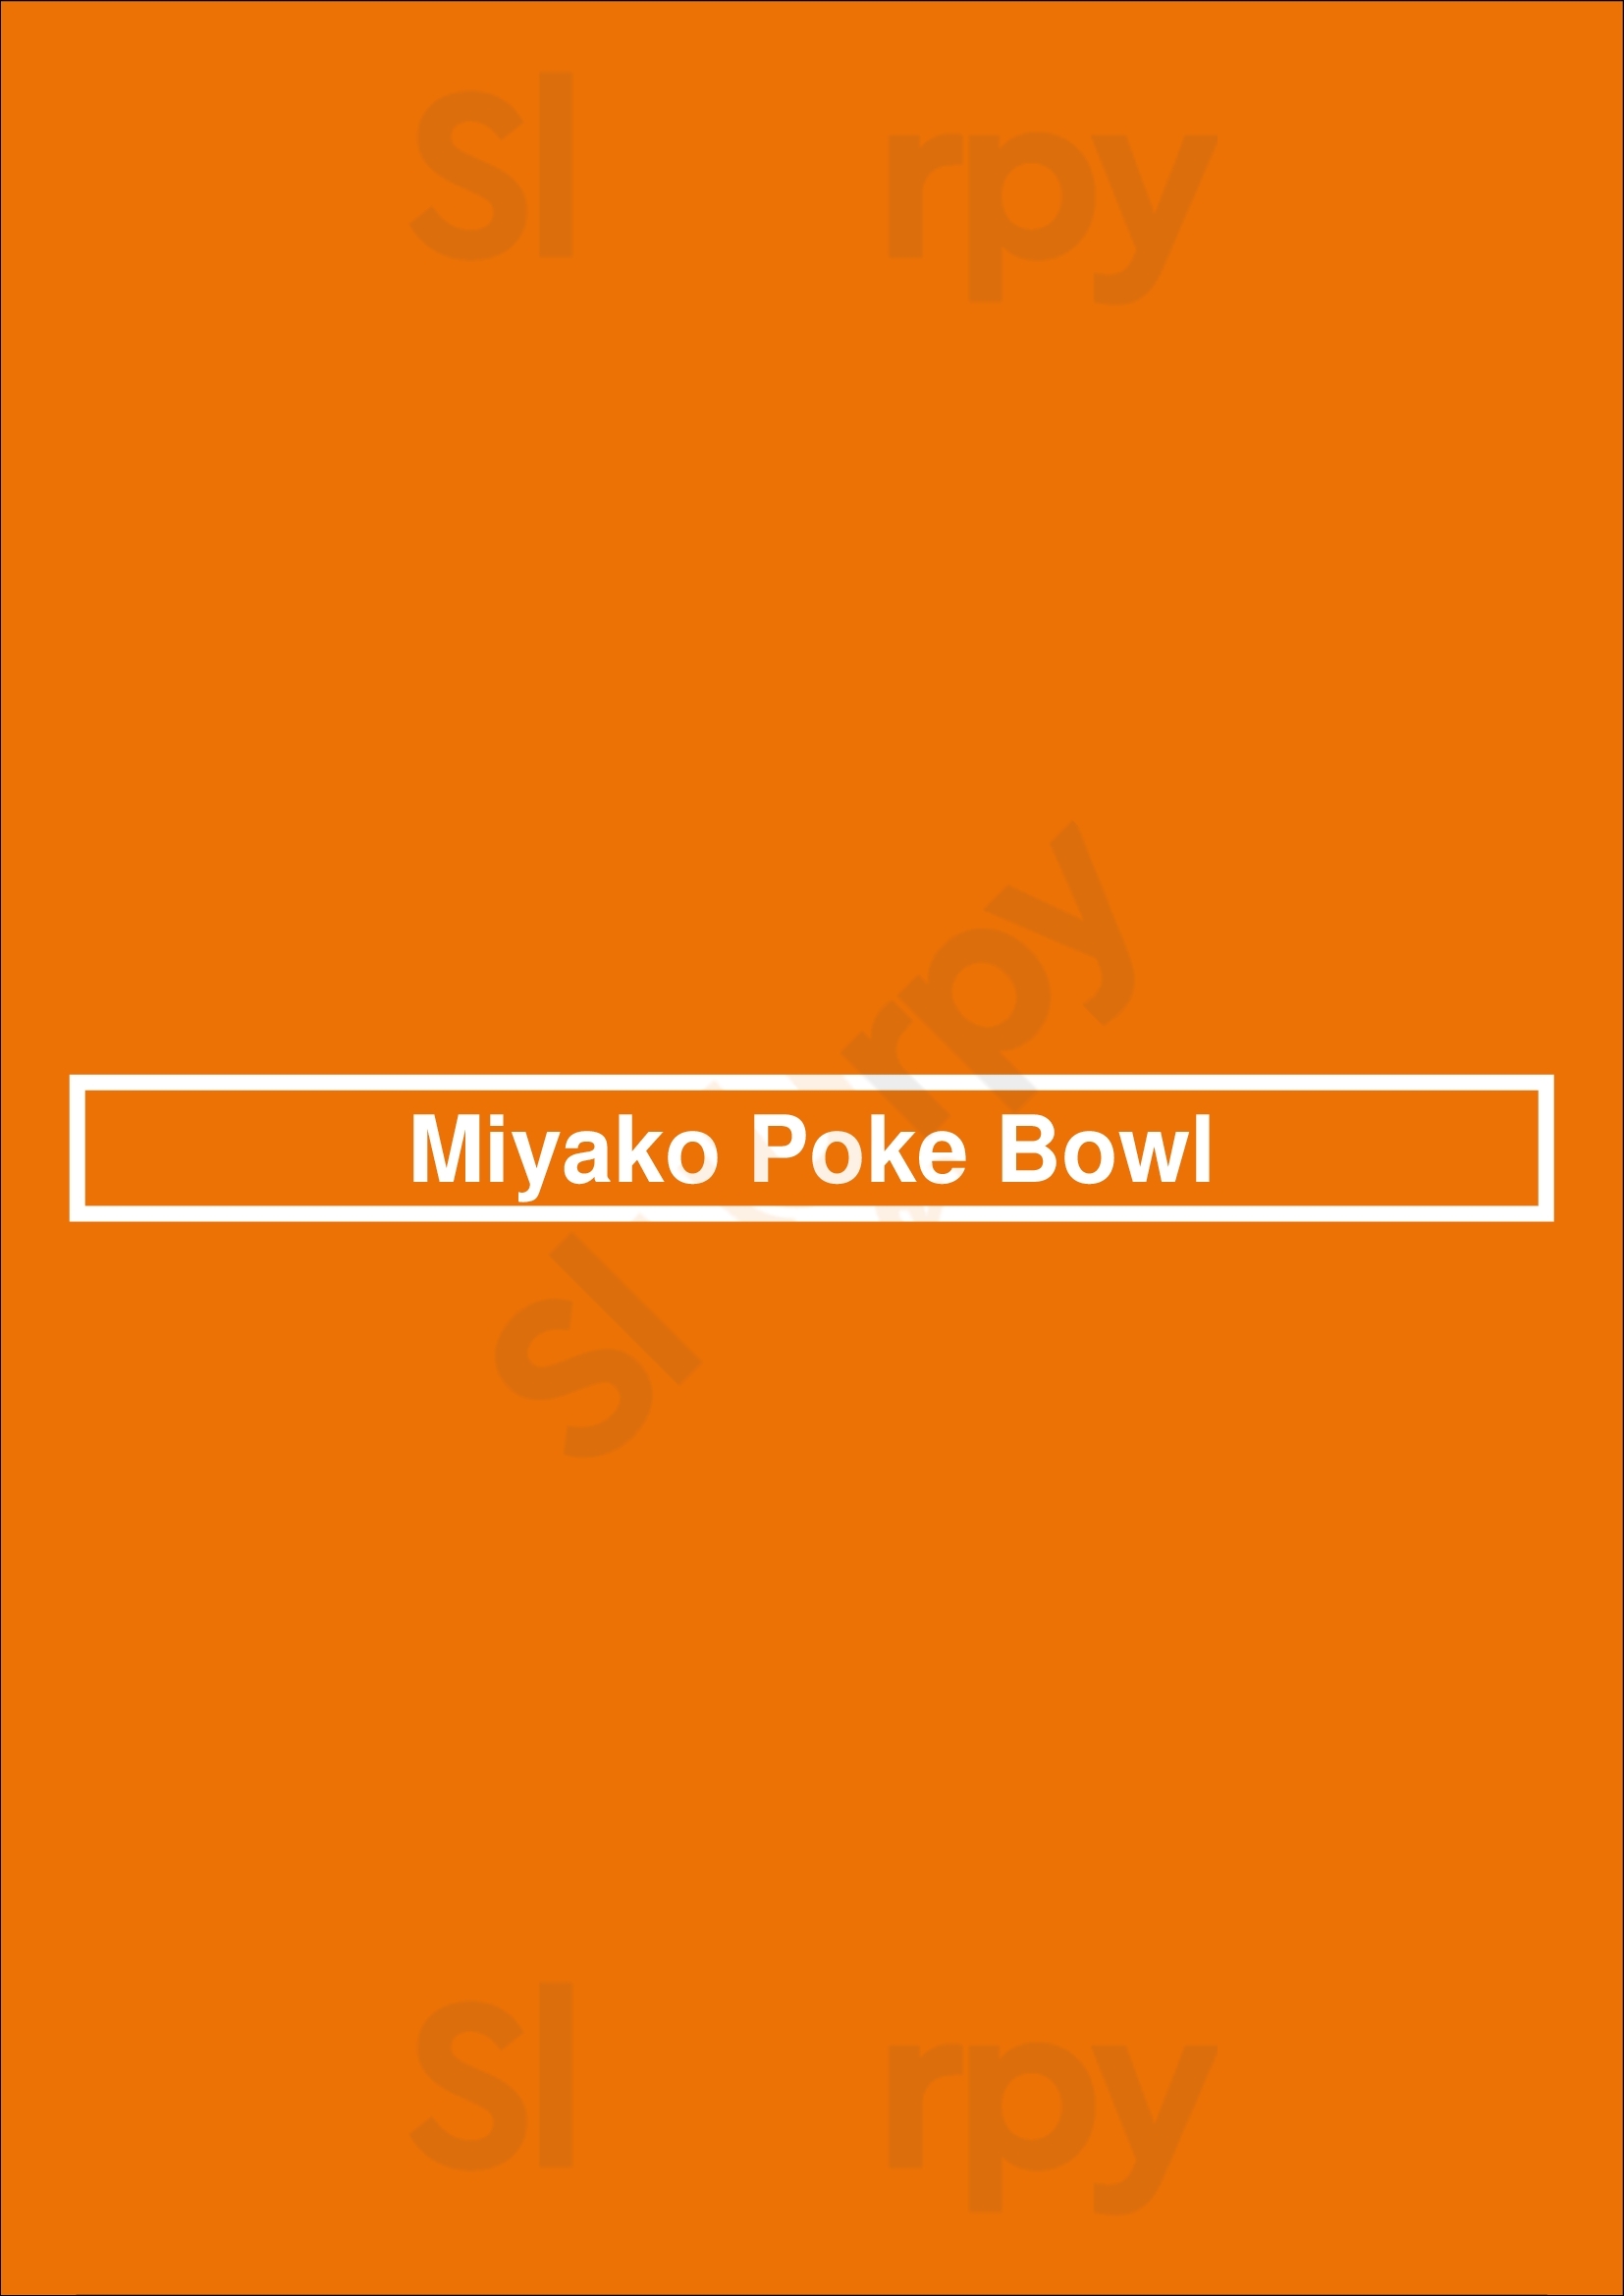 Miyako Poke Bowl Lexington Menu - 1